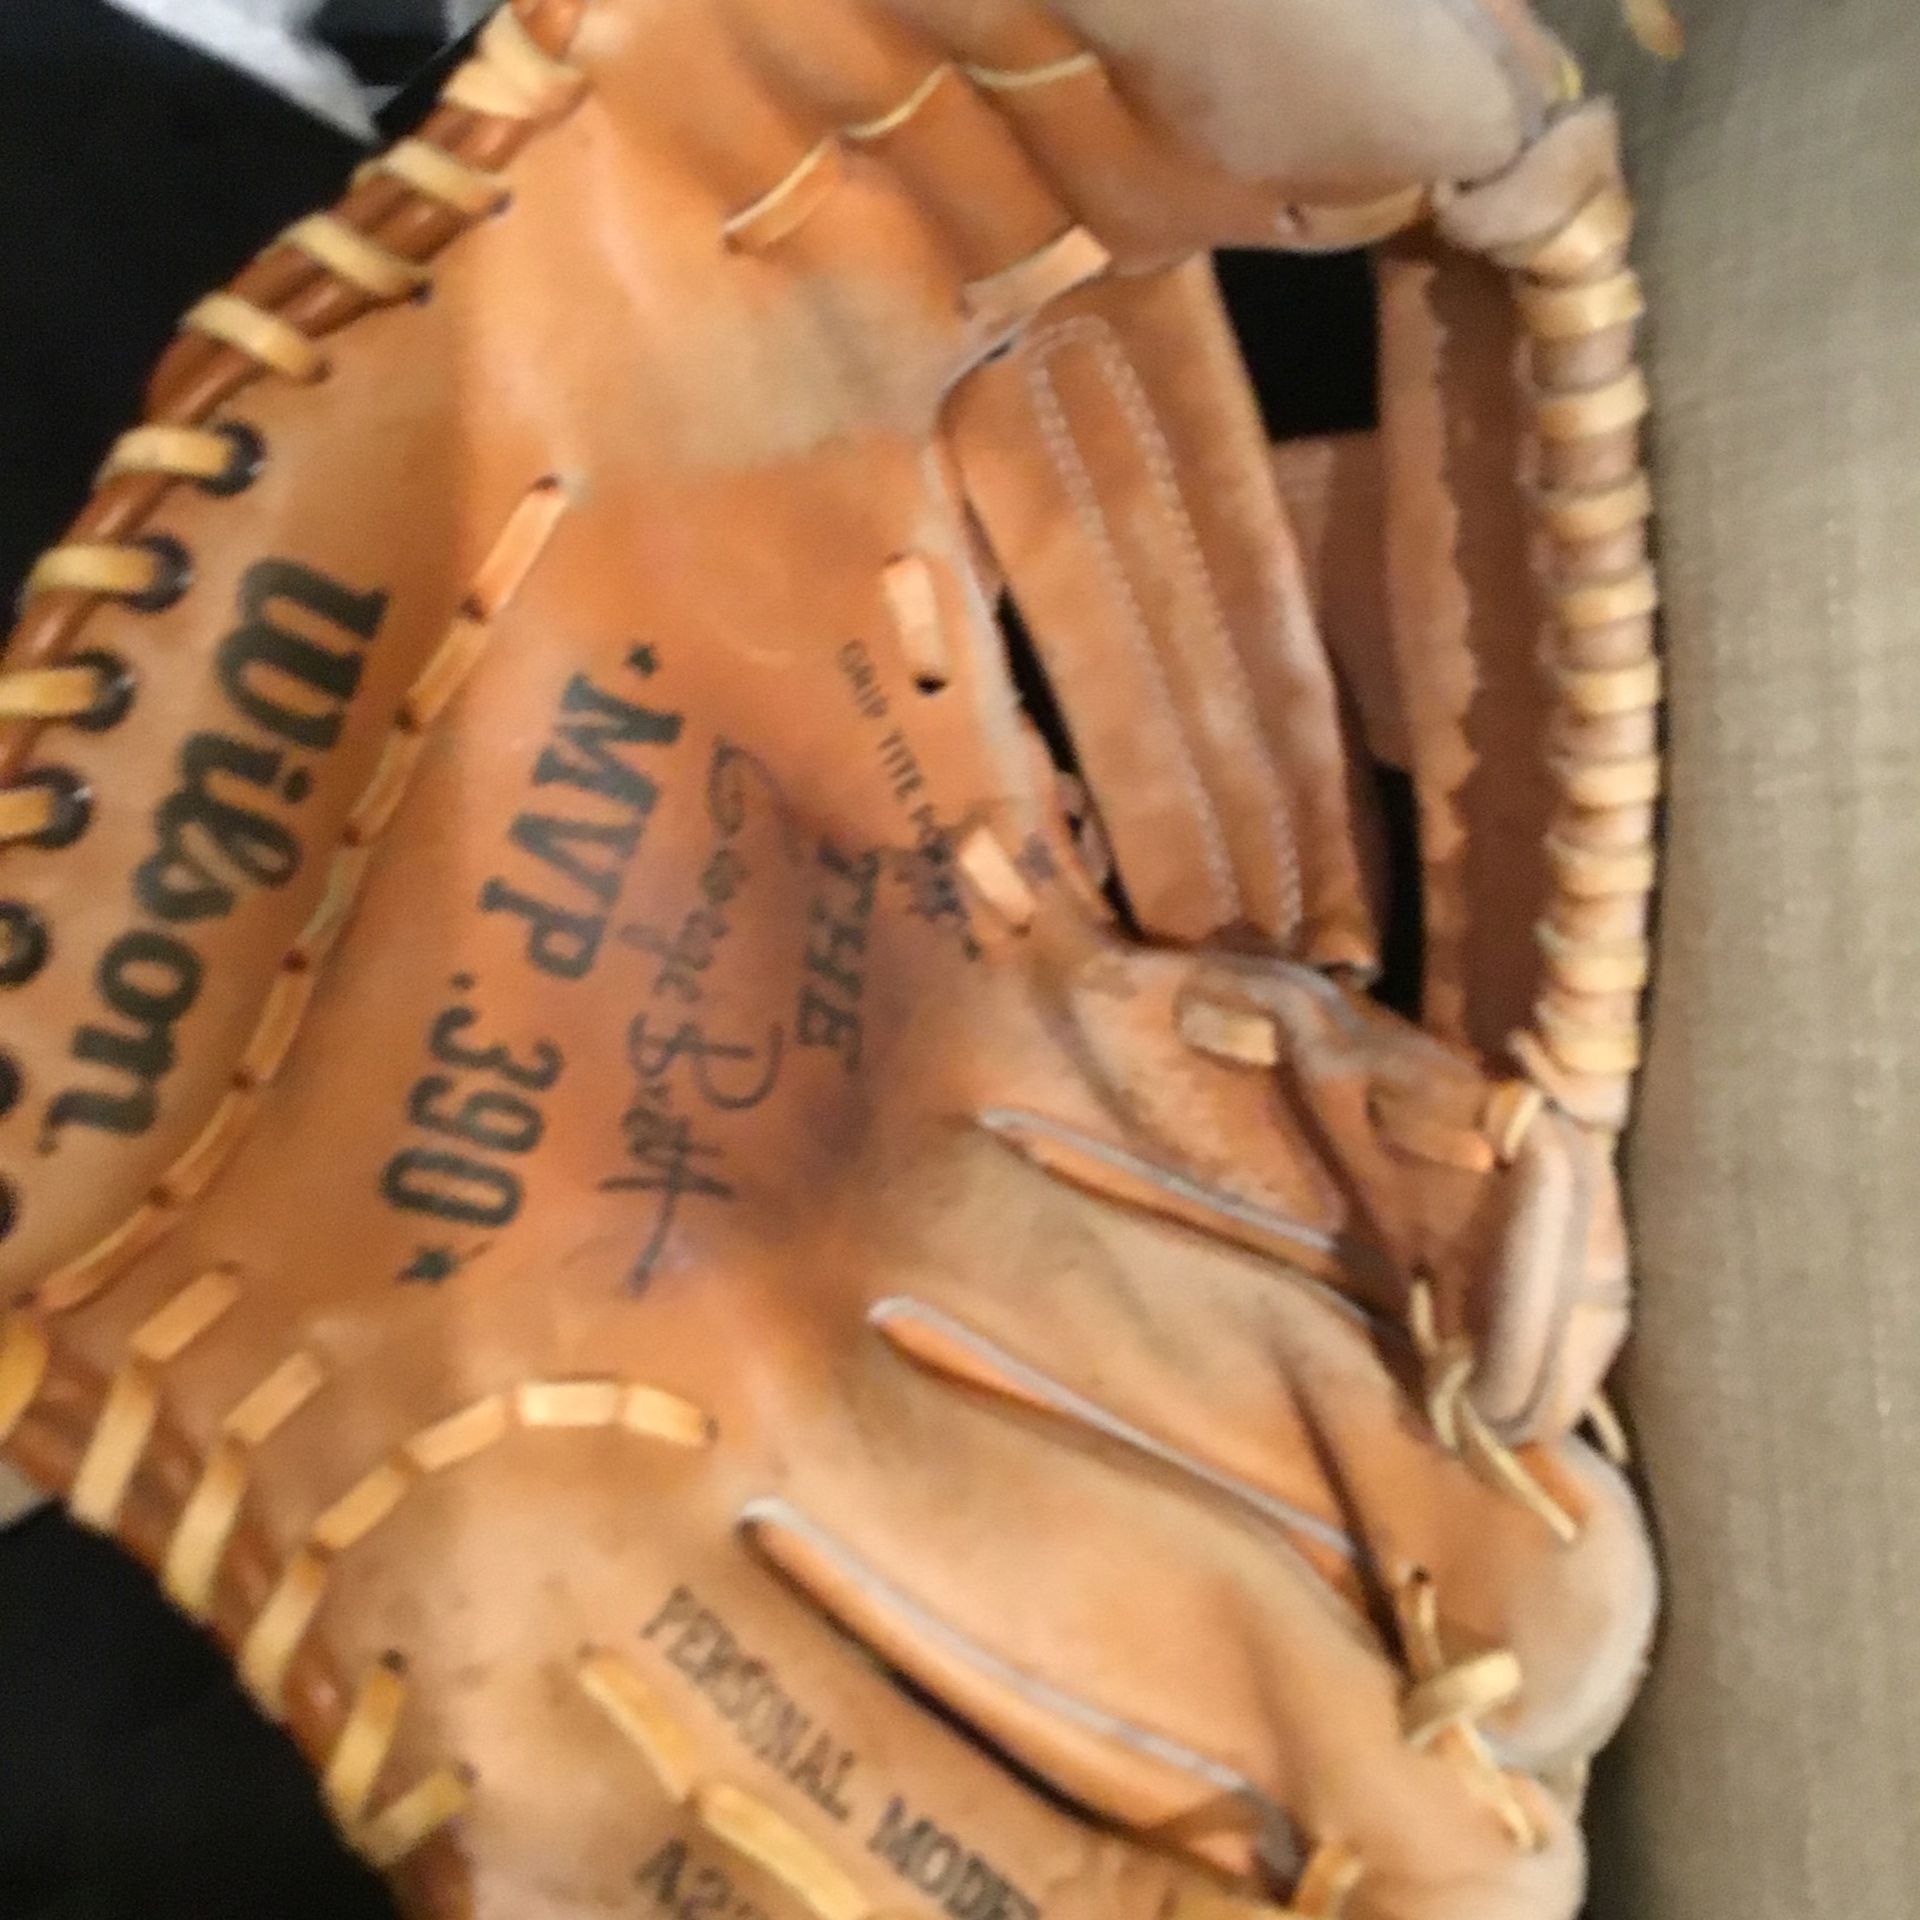 Wilson Childs Baseball Glove